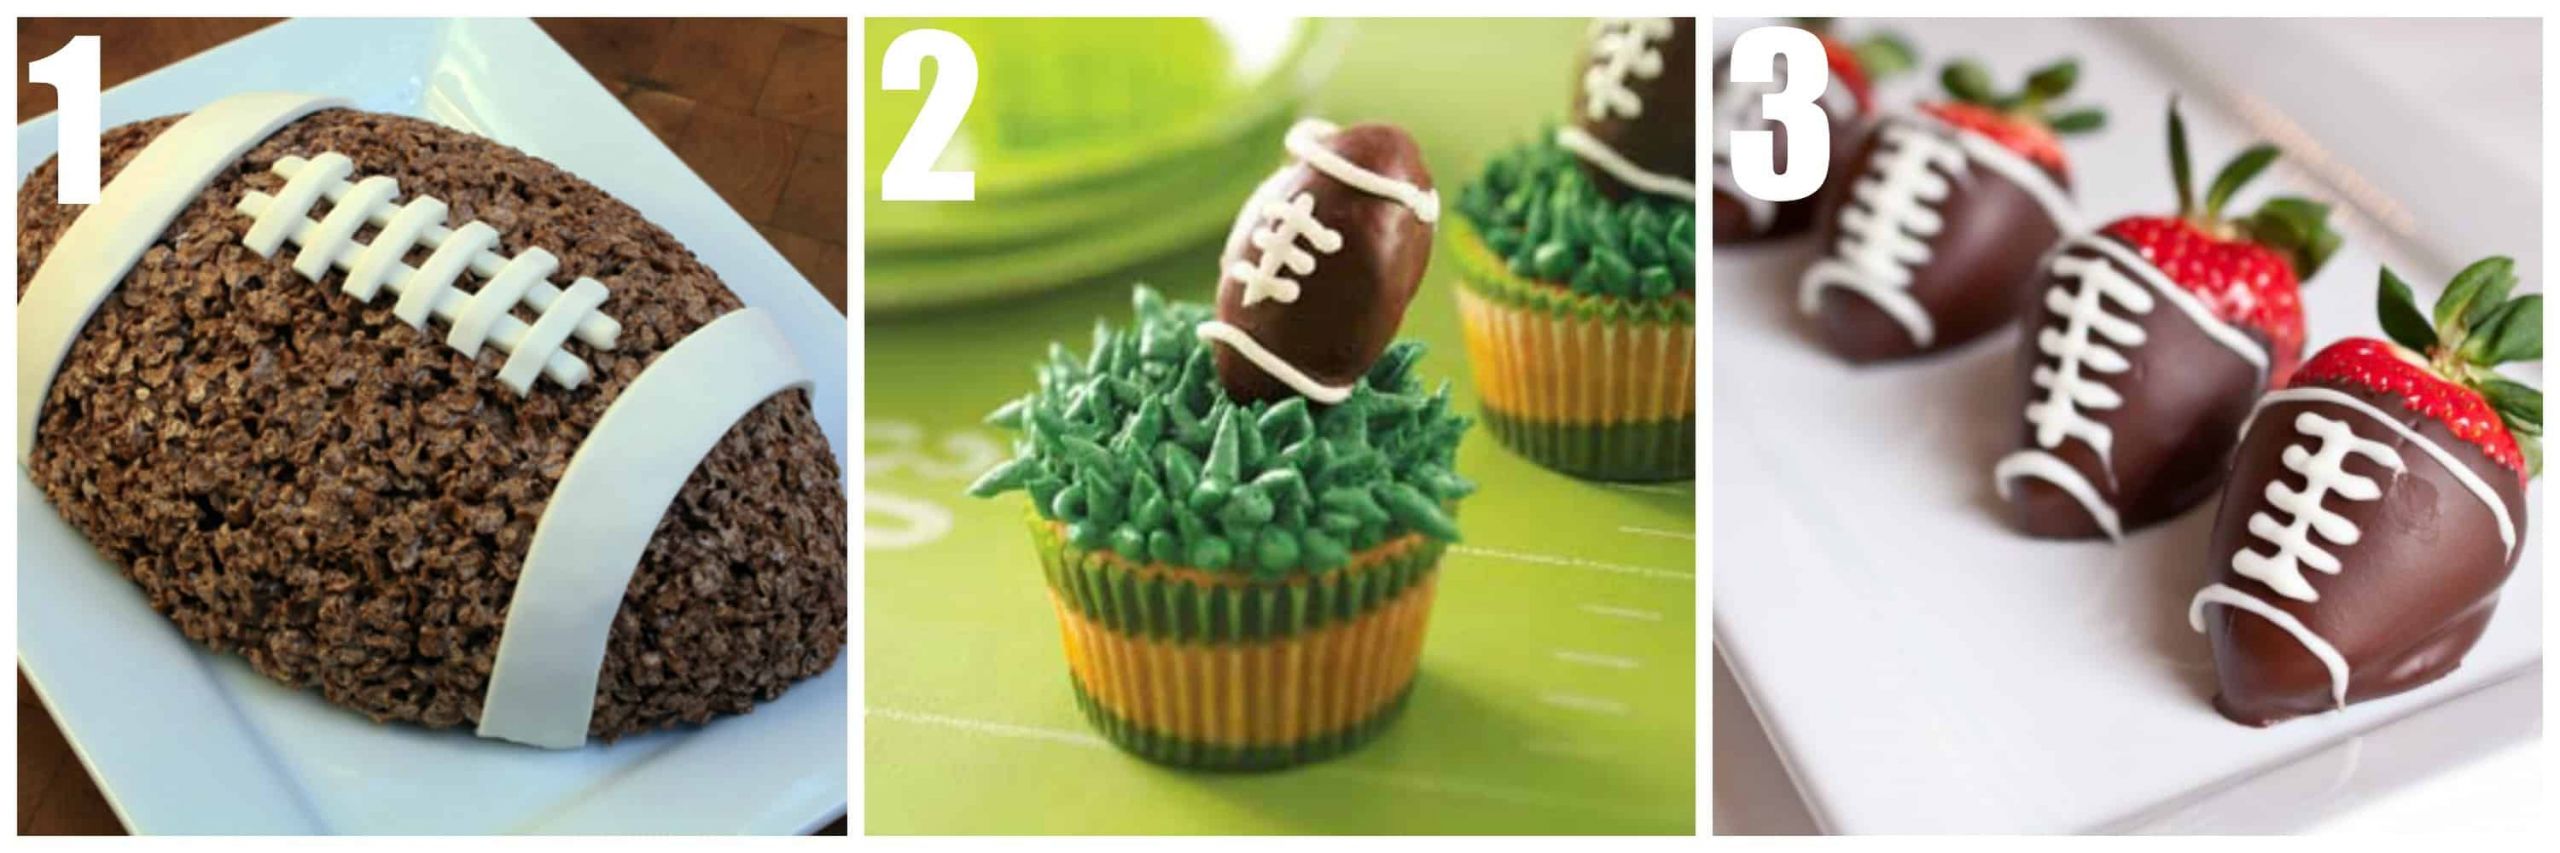 Football Desserts Recipes
 Fabulous football dessert ideas • CakeJournal